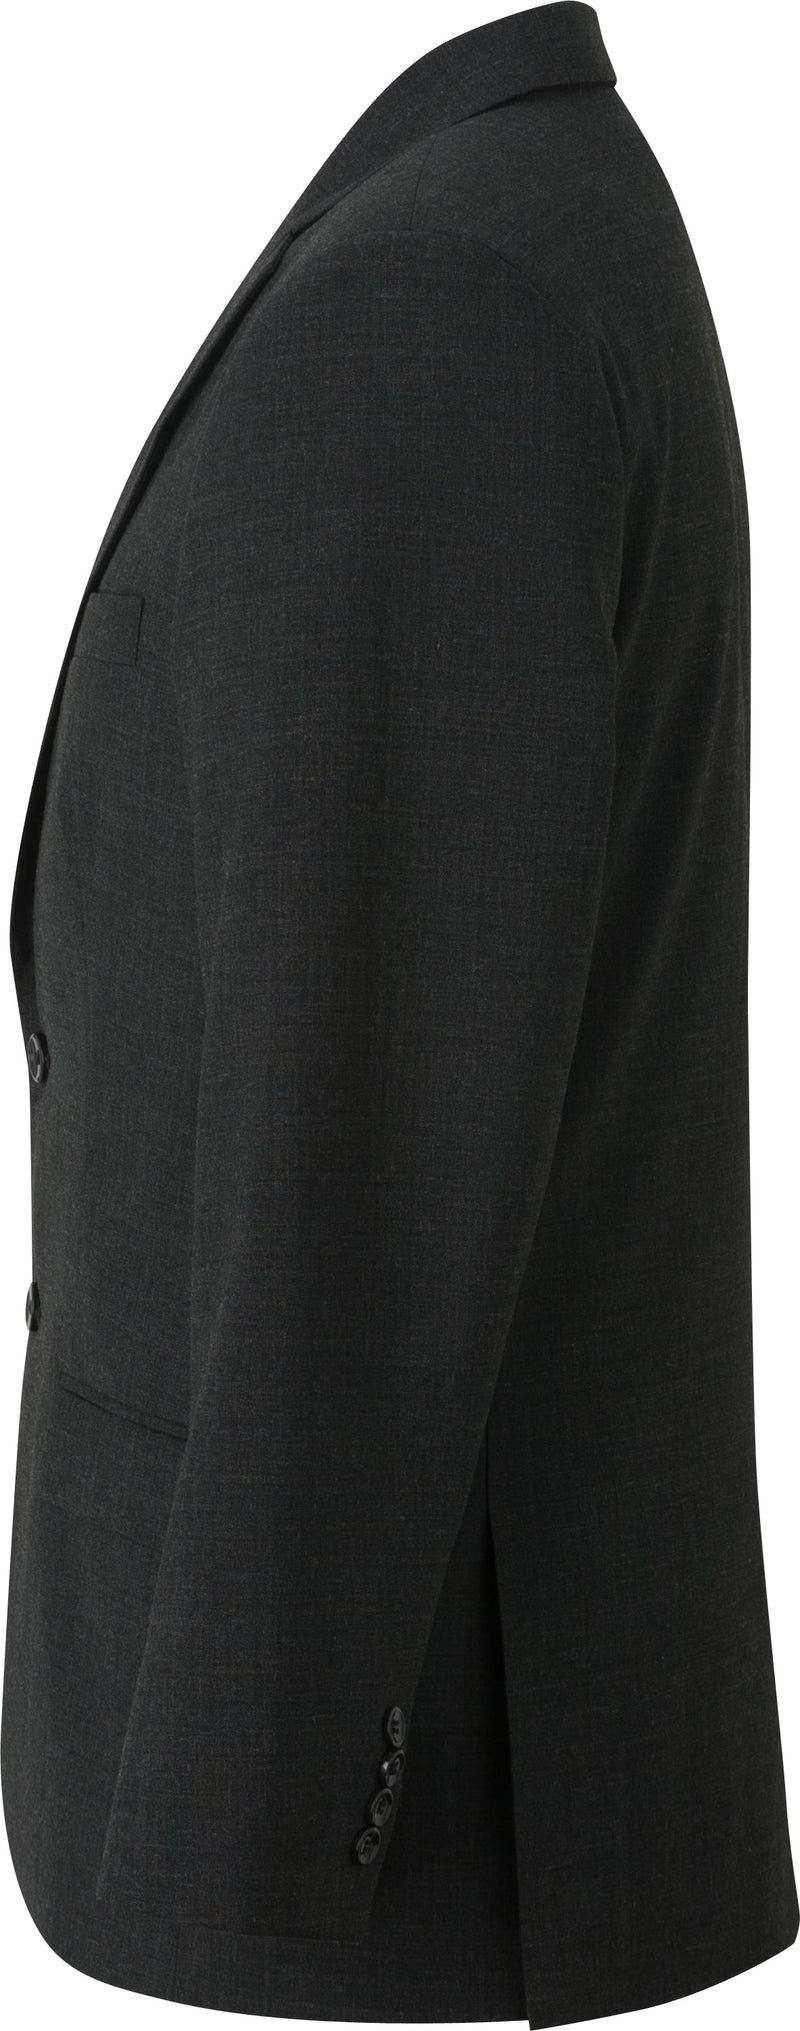 Edwards [3650] Men's Suit Coat with Double Back Vent. Redwood & Ross Signature Collection. Live Chat For Bulk Discounts.